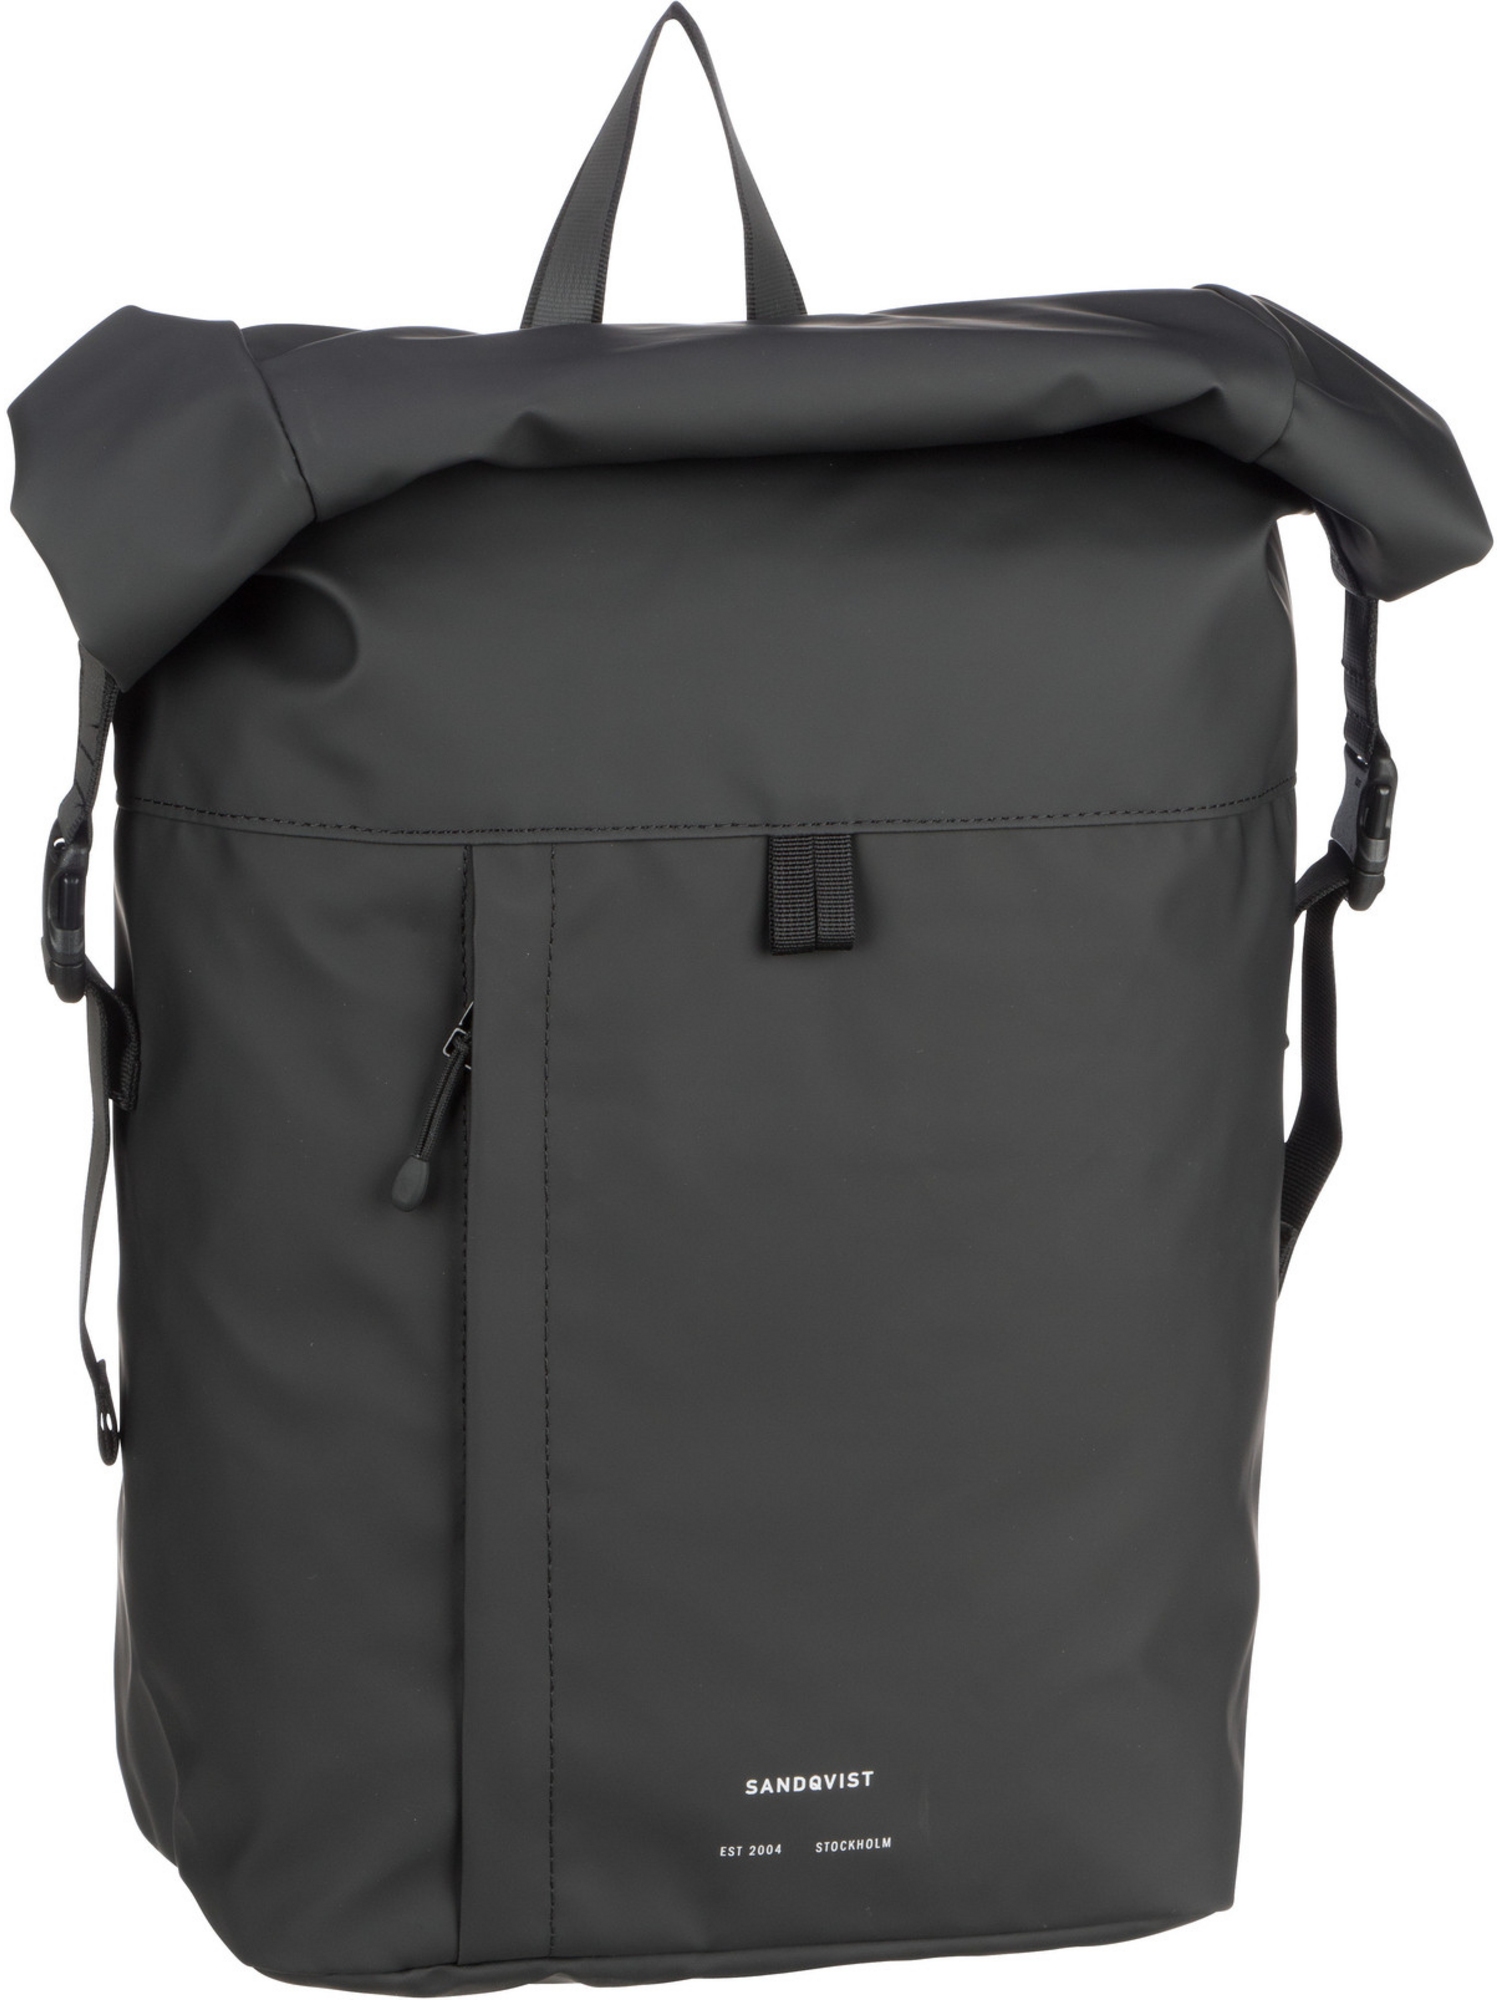 Рюкзак SANDQVIST/Backpack Konrad Backpack, черный рюкзак sandqvist backpack jonatan цвет ash grey